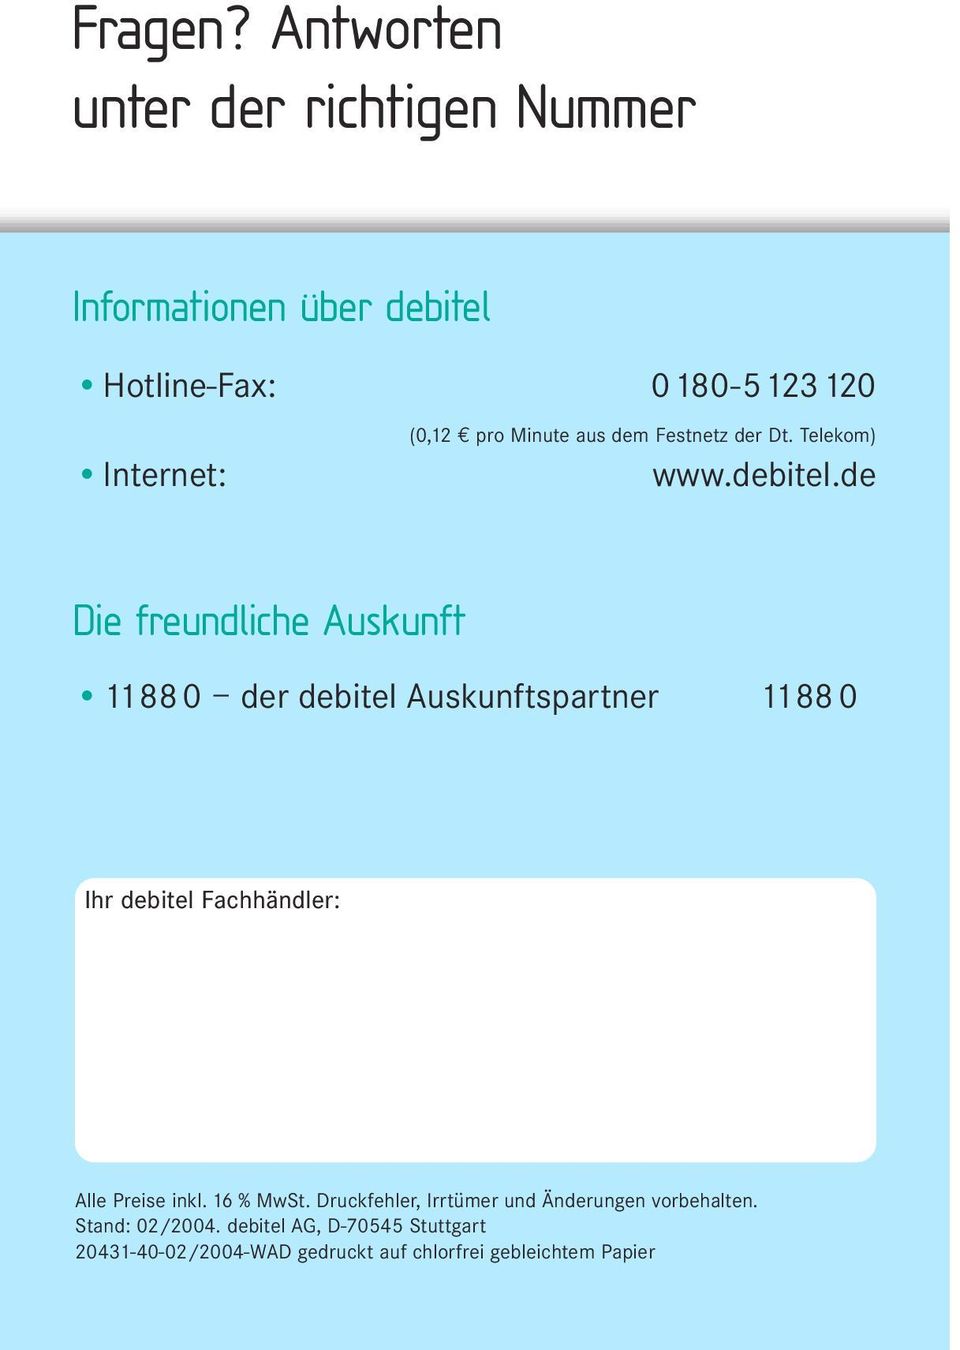 dem Festnetz der Dt. Telekom) Internet: www.debitel.